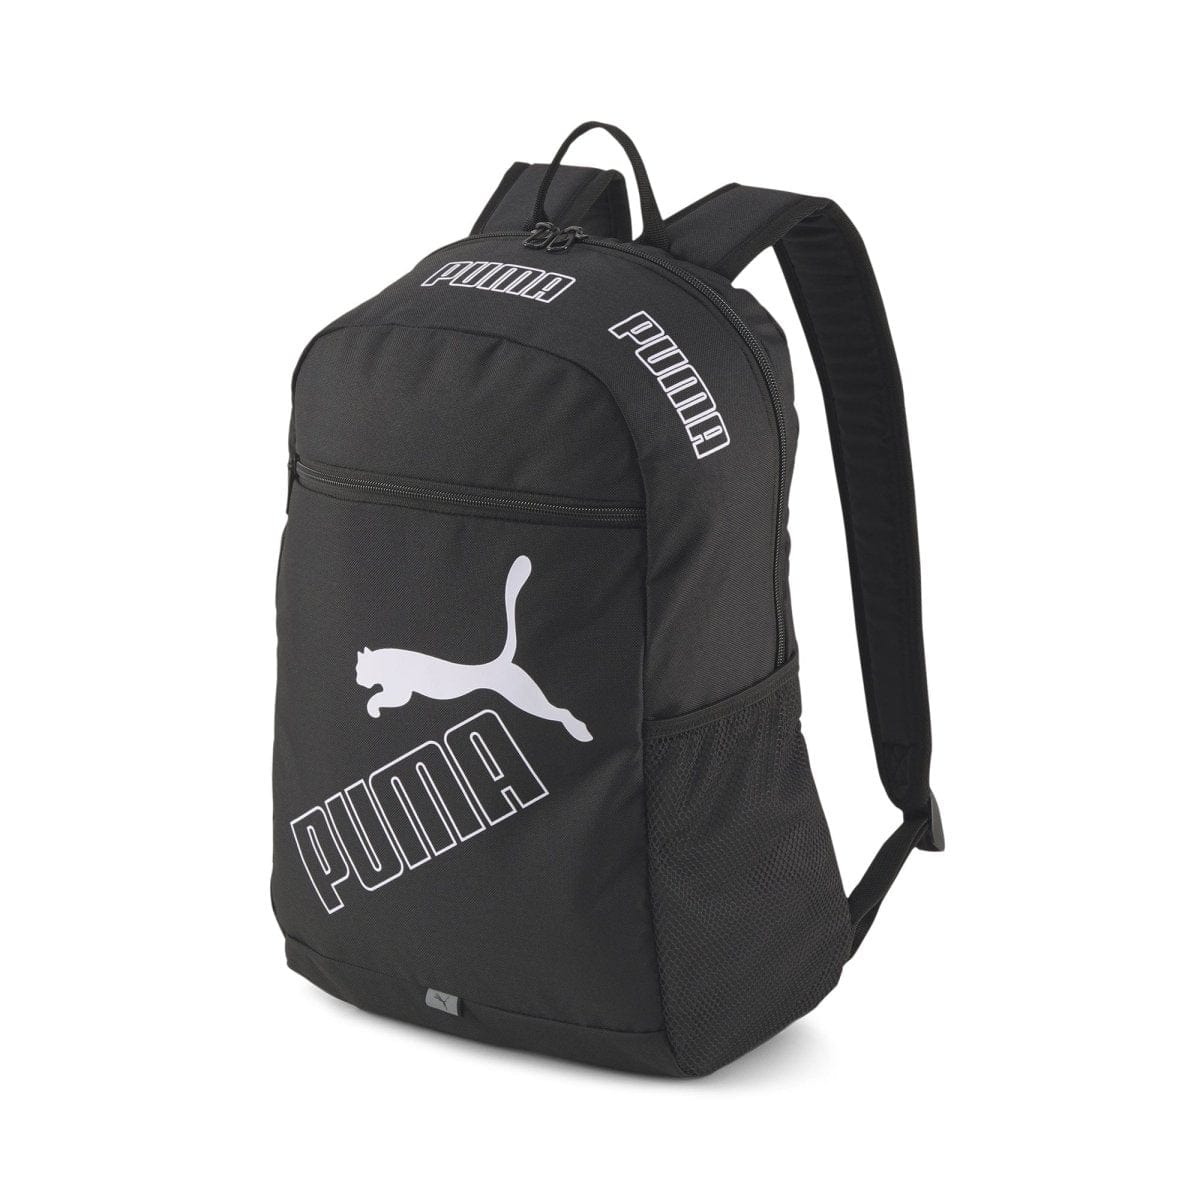 Backpack Reebok Training Gym Sports Athletic Bag Motion U Active